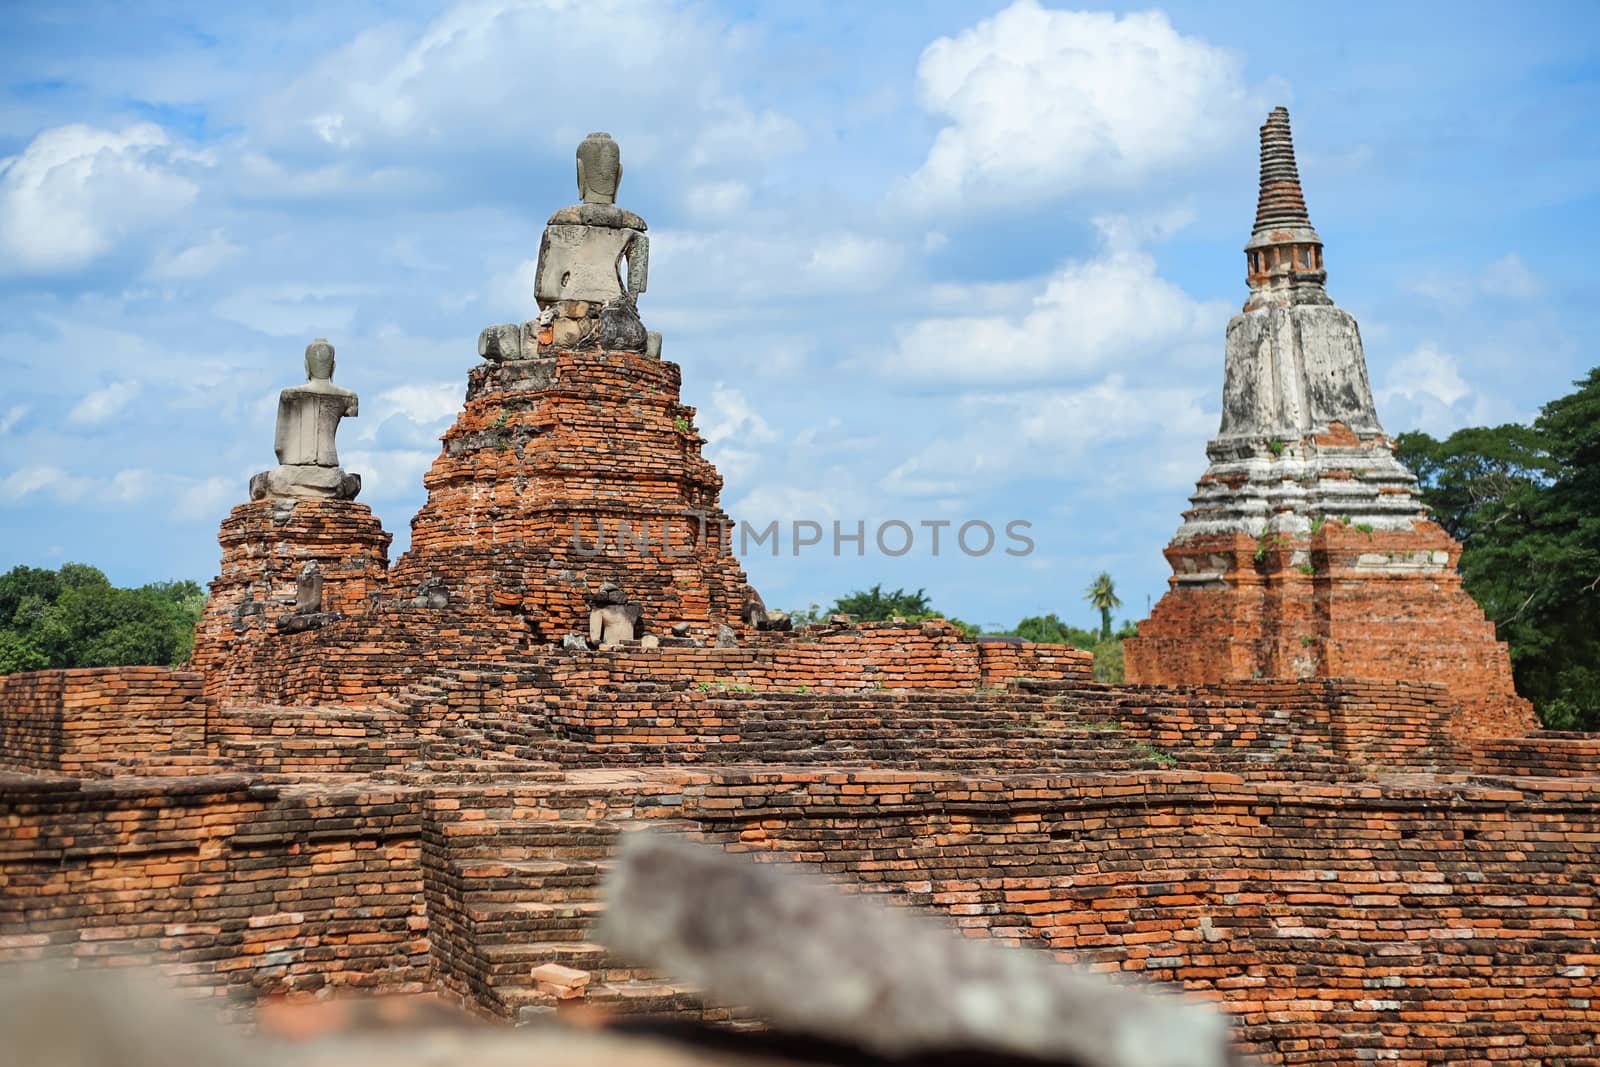 Old pagoda and ruined Buddha statue in Chaiwatthanaram temple. Ayutthaya, Thailand.